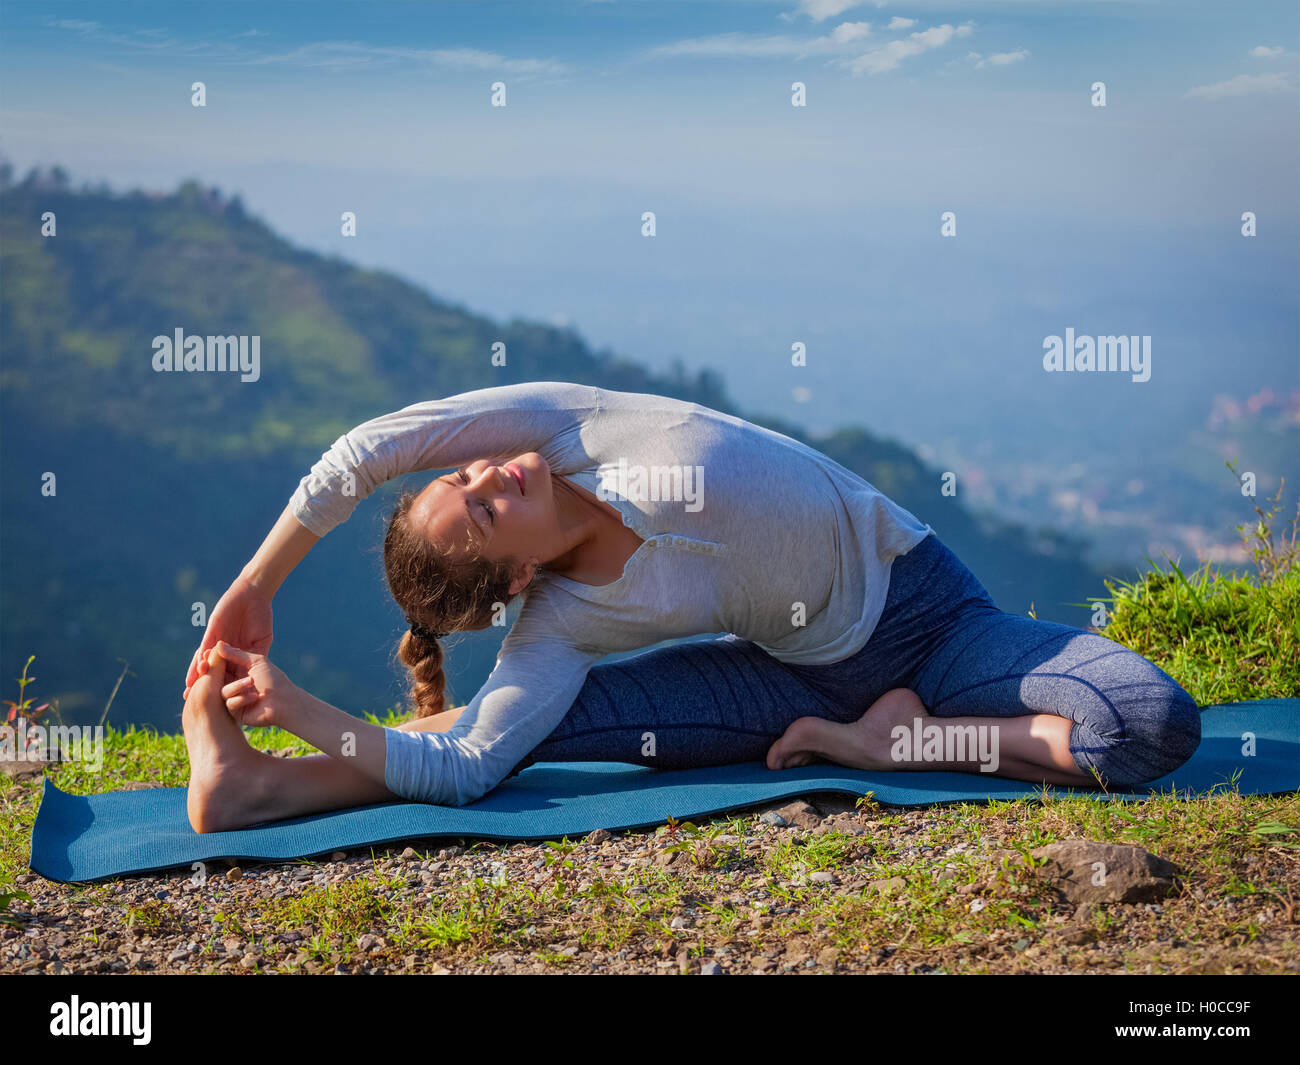 Young sporty fit woman doing Hatha Yoga asana Stock Photo